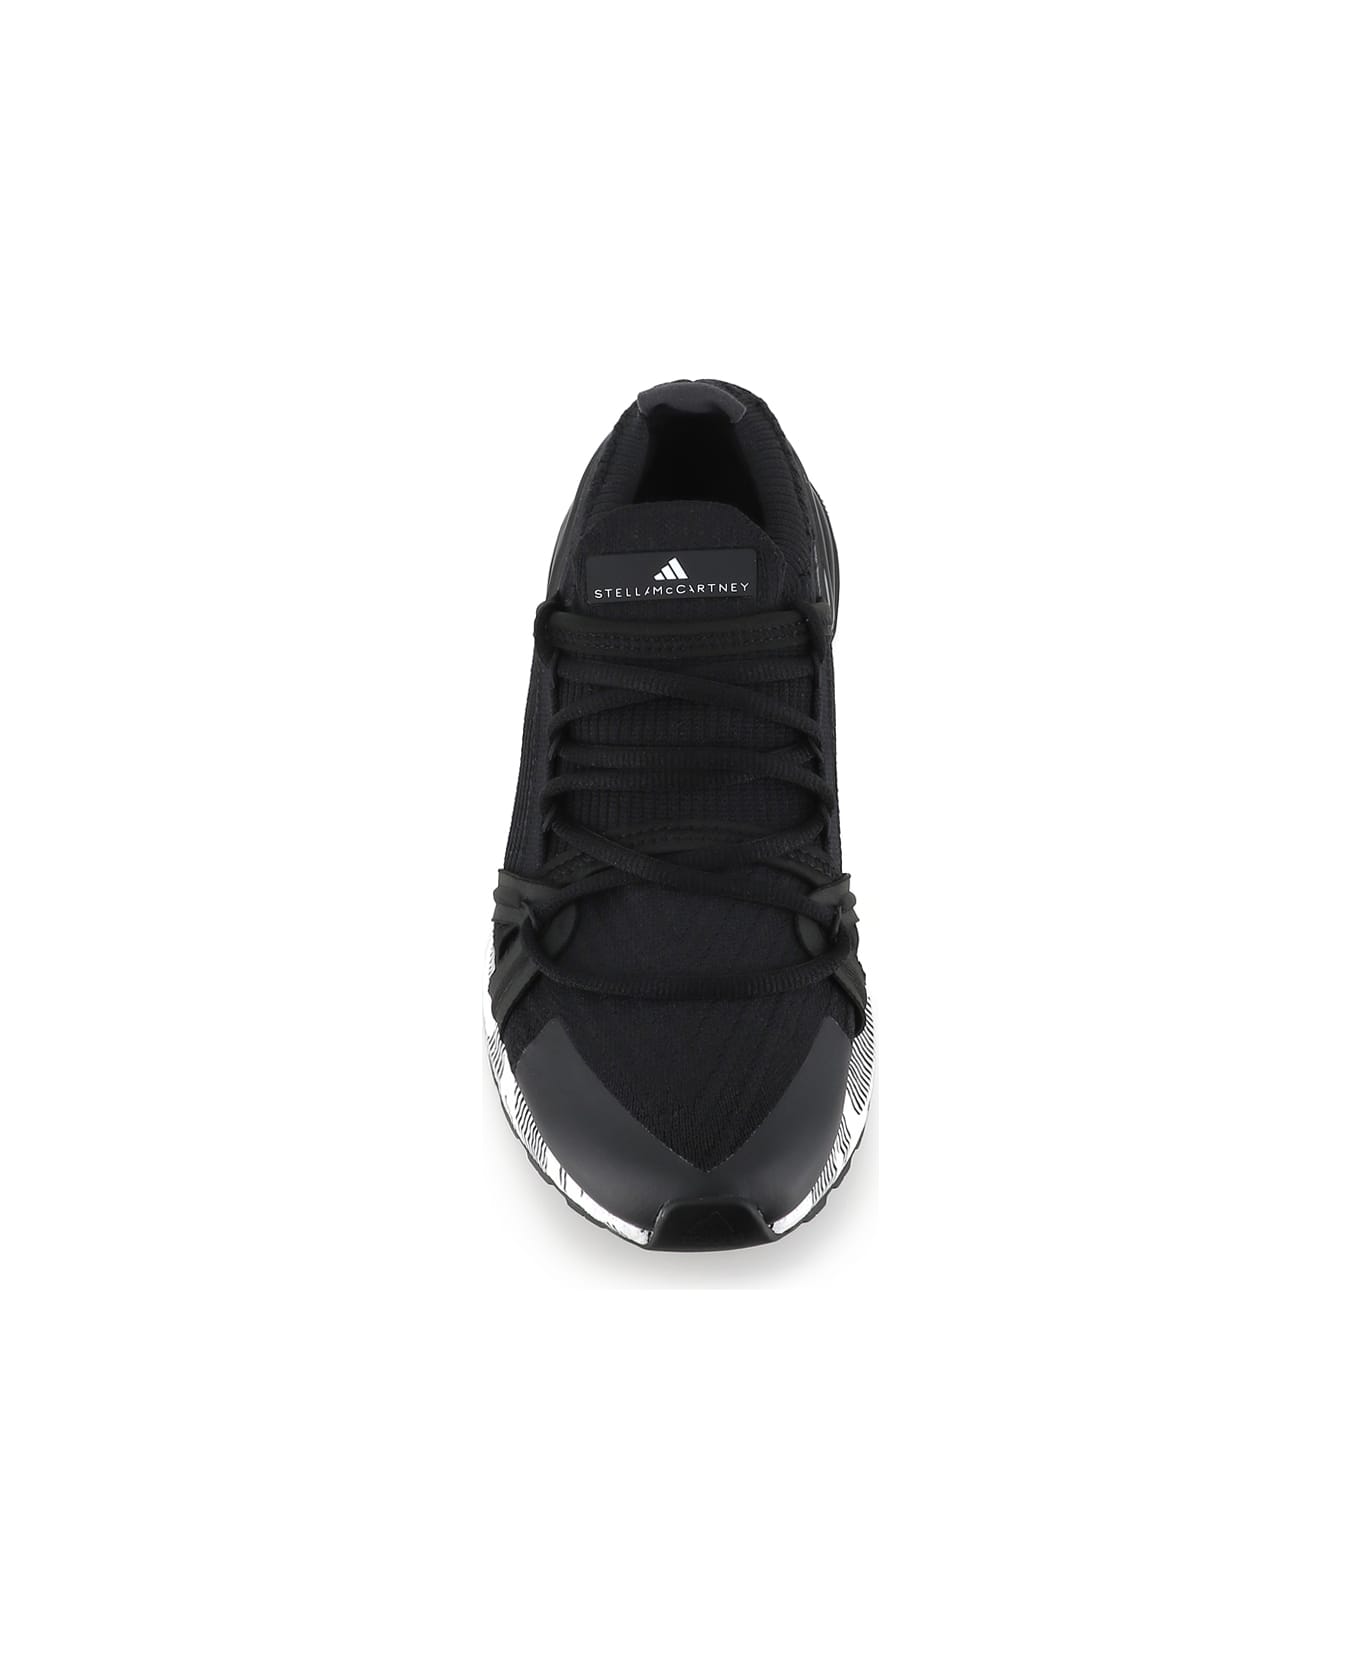 Adidas by Stella McCartney Ultraboost 20 Low-top Sneakers - Black/white